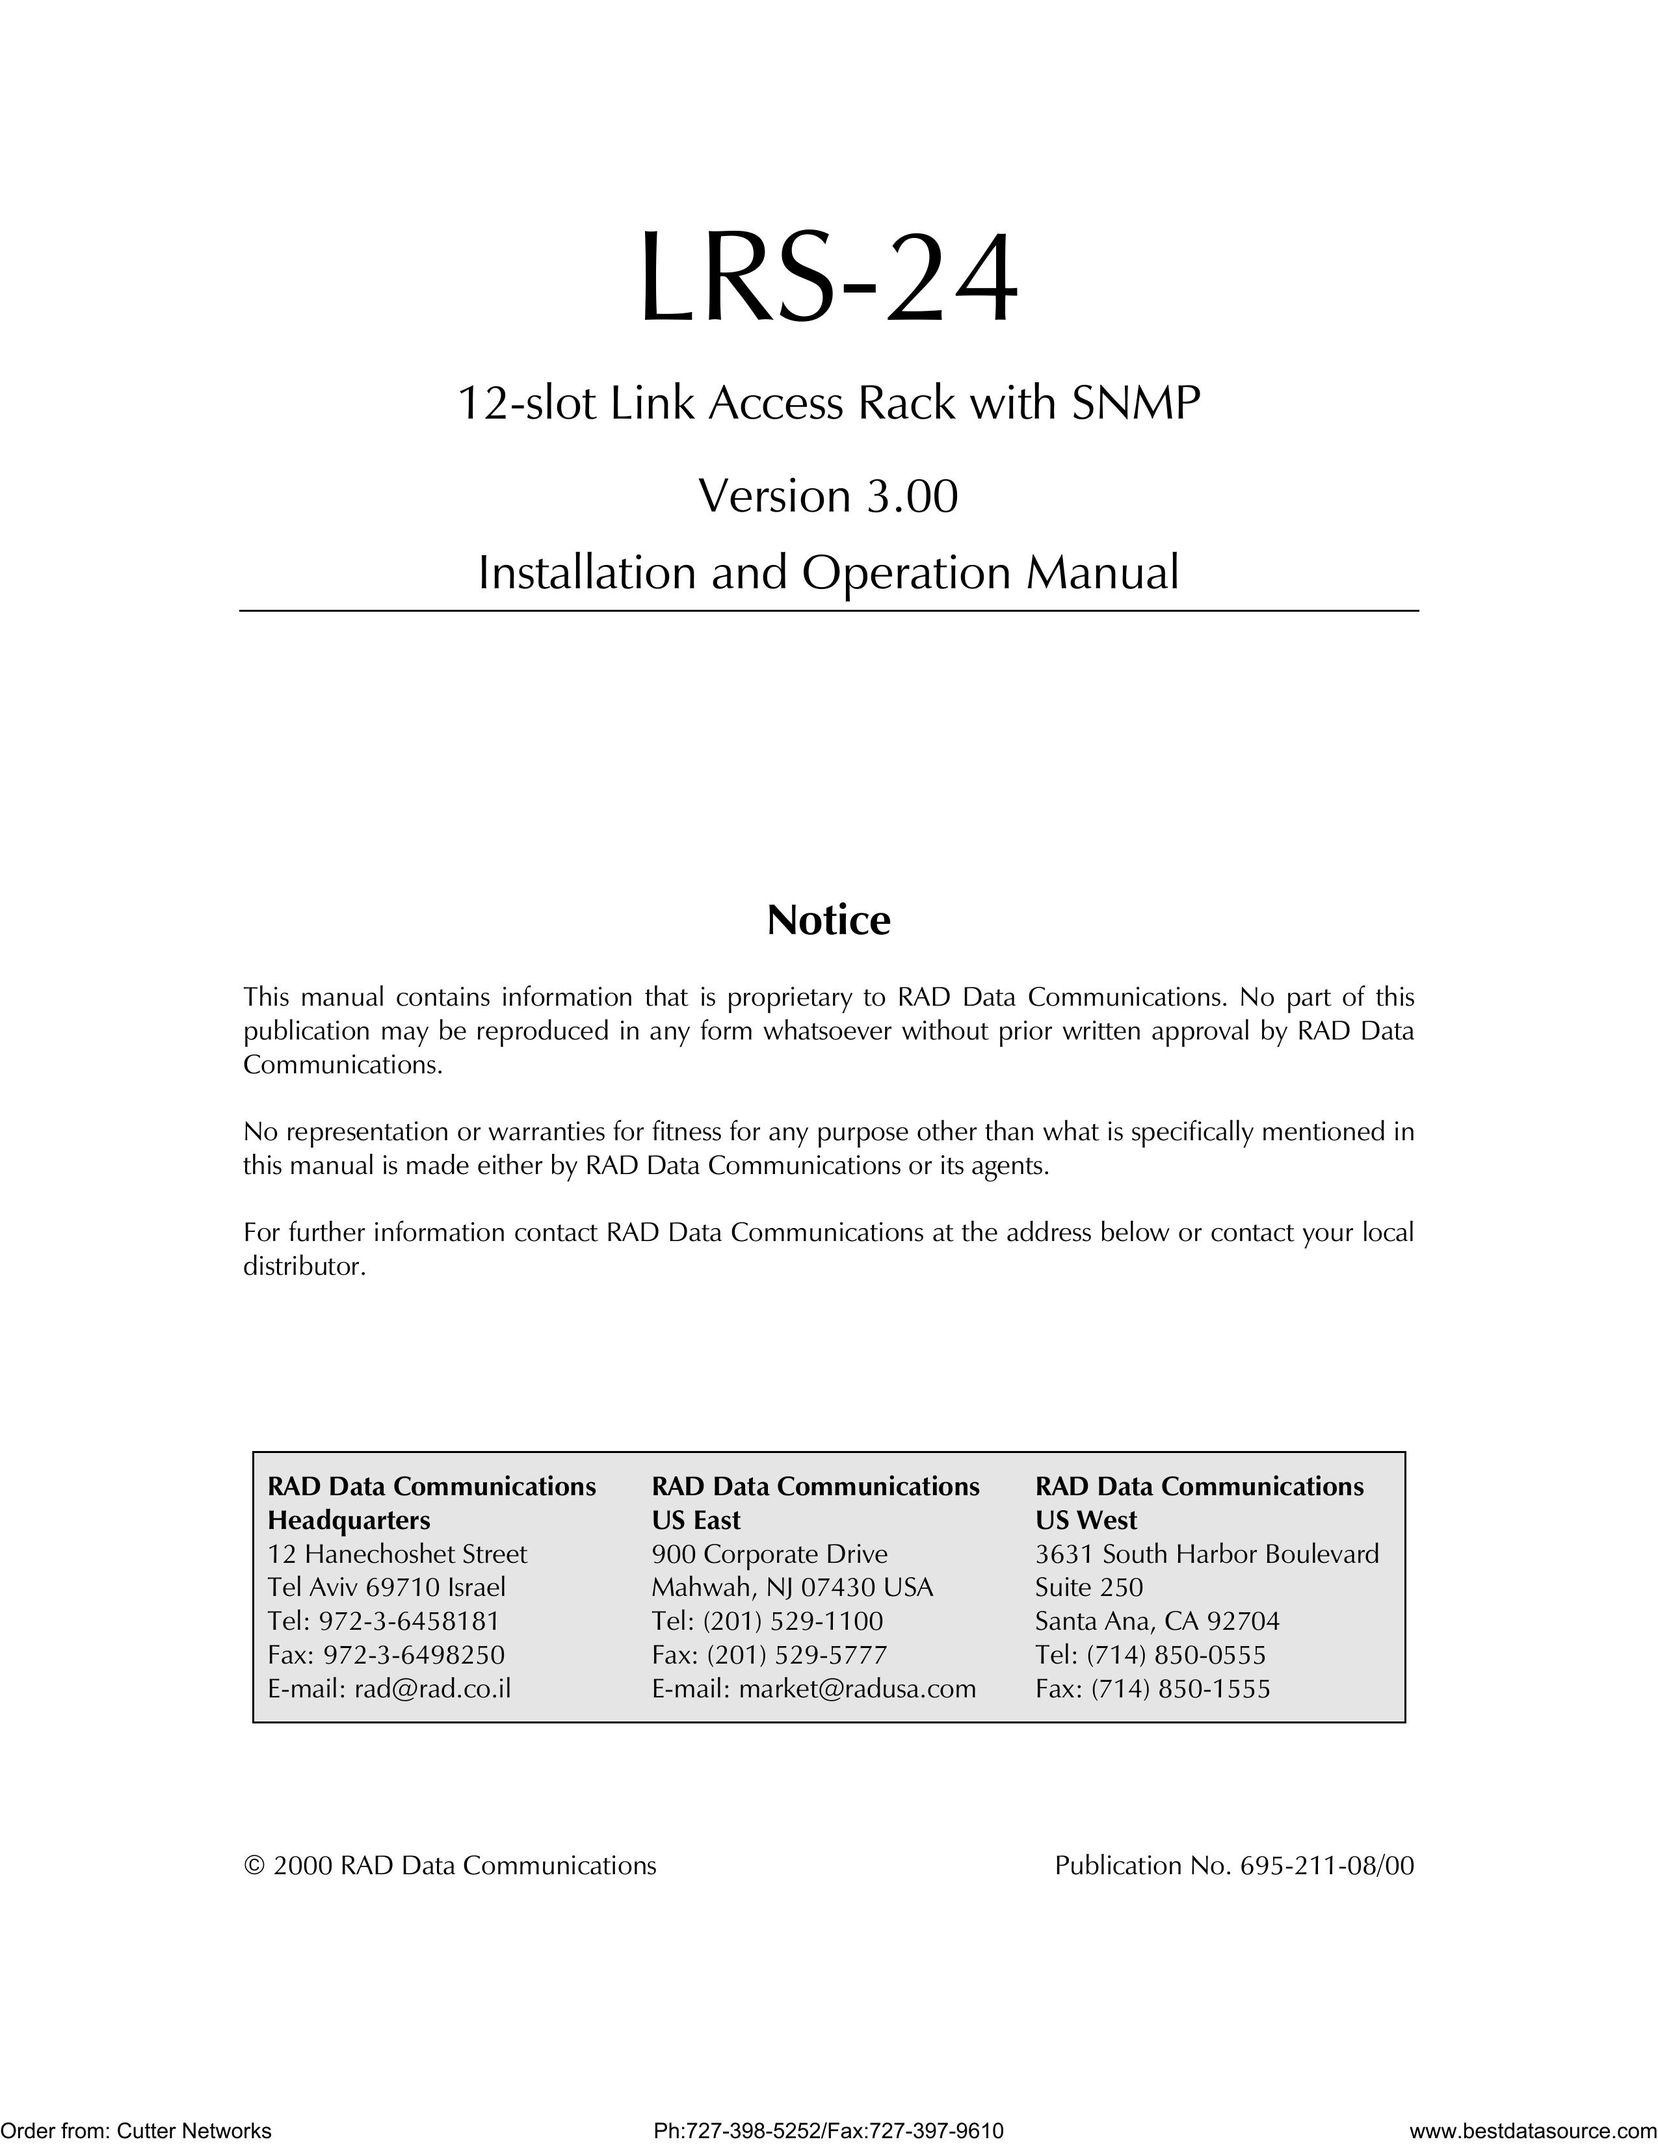 RAD Data comm LRS-24 Network Card User Manual